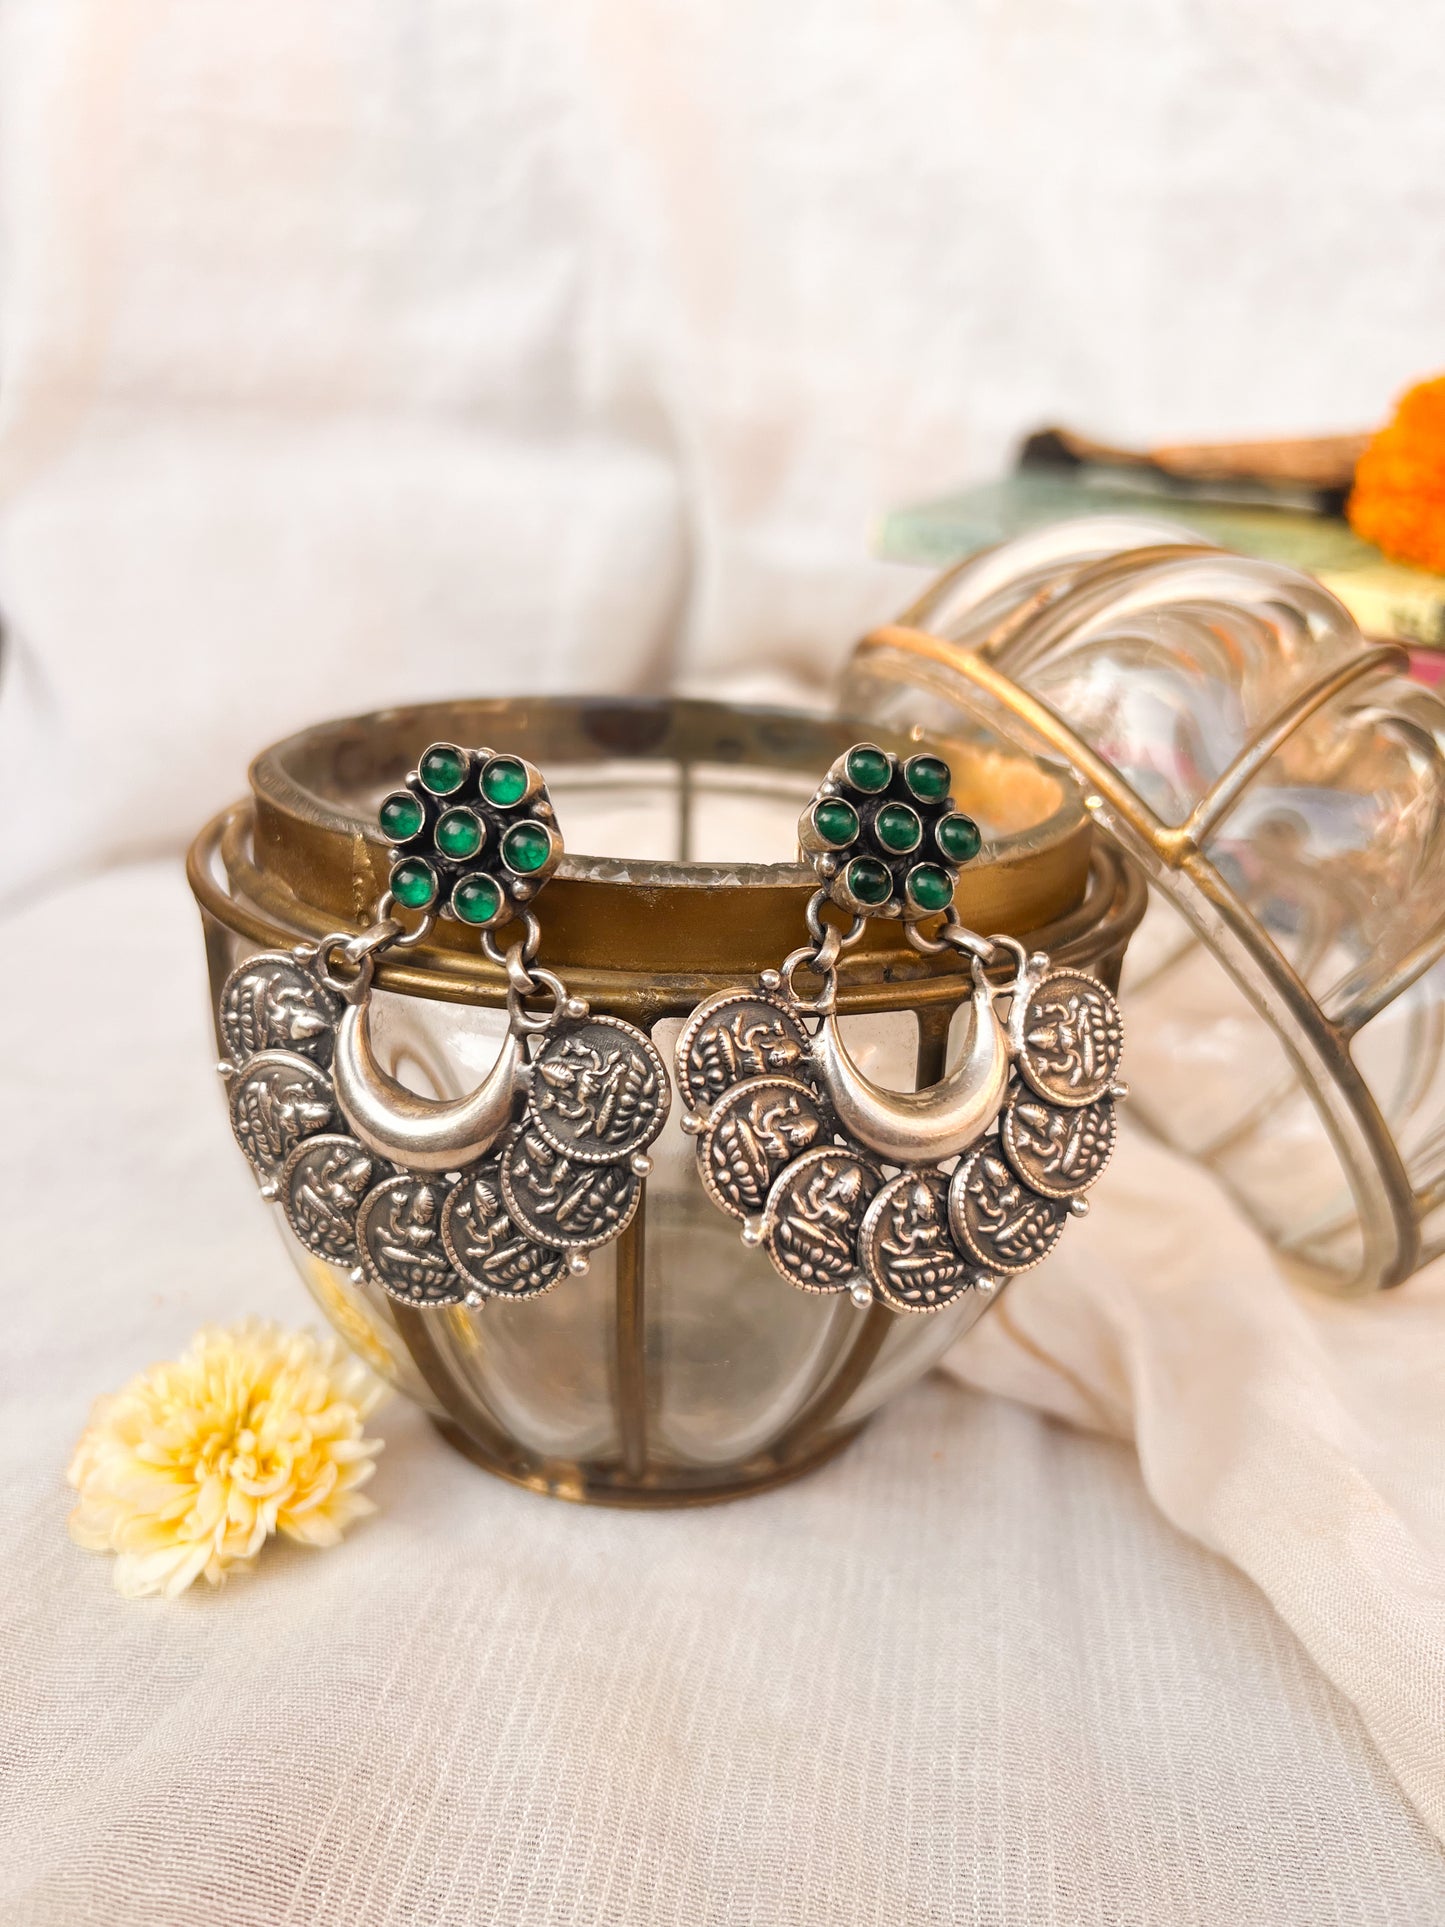 Lakkhi oxidised silver earrings with green onyx